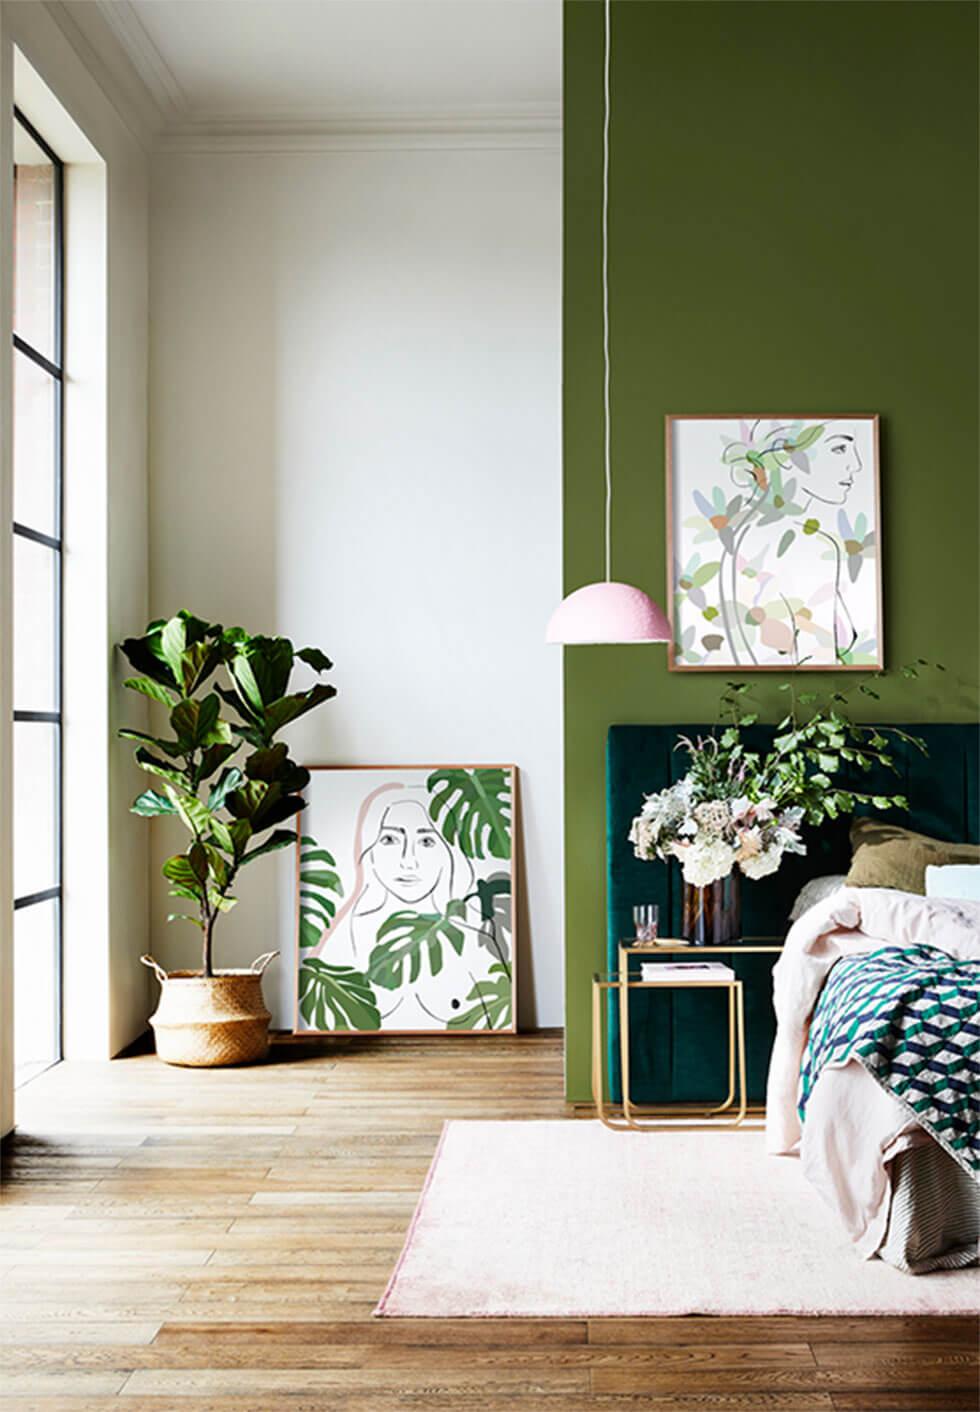 Light green bedroom with indoor plants and green artwork.